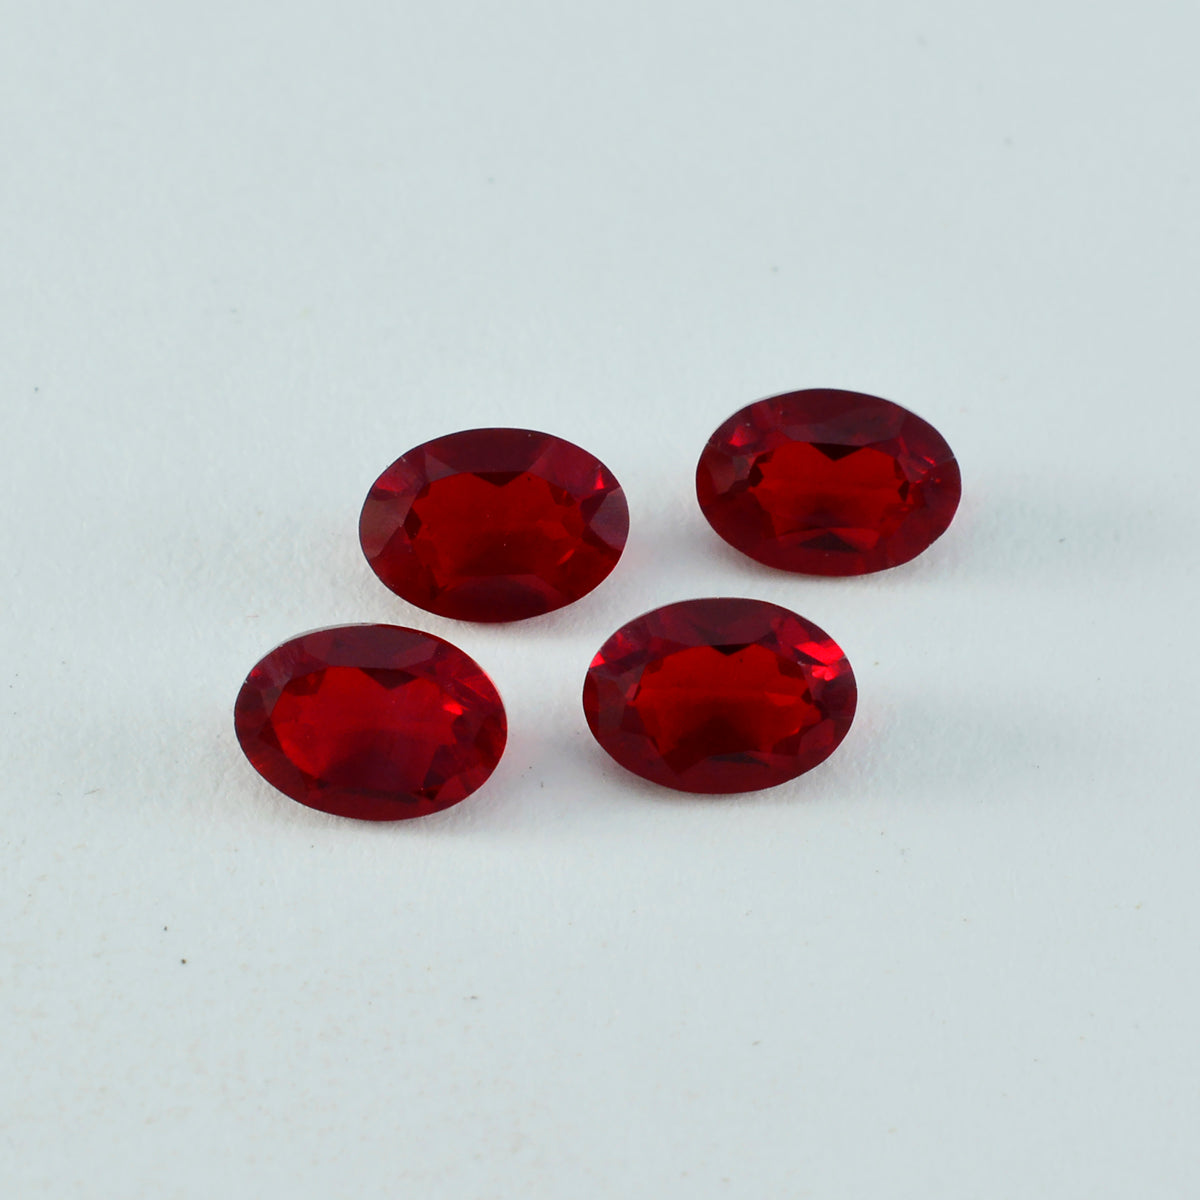 Riyogems 1PC Red Ruby CZ gefacetteerd 6x8 mm ovale vorm verbazingwekkende kwaliteit edelstenen